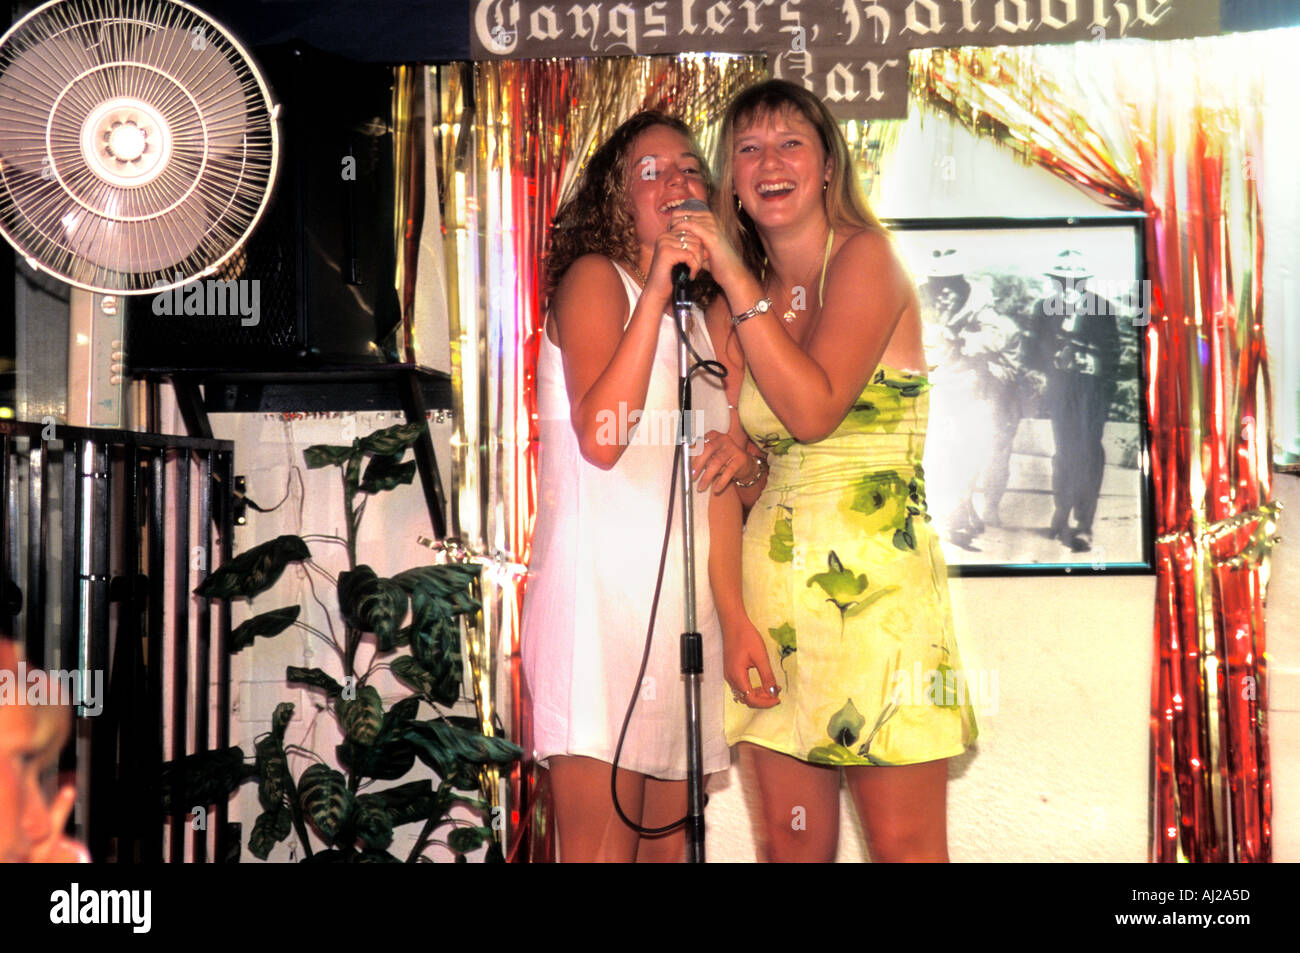 Young English women singing at karaoke bar in Tenerife, Spain Stock Photo